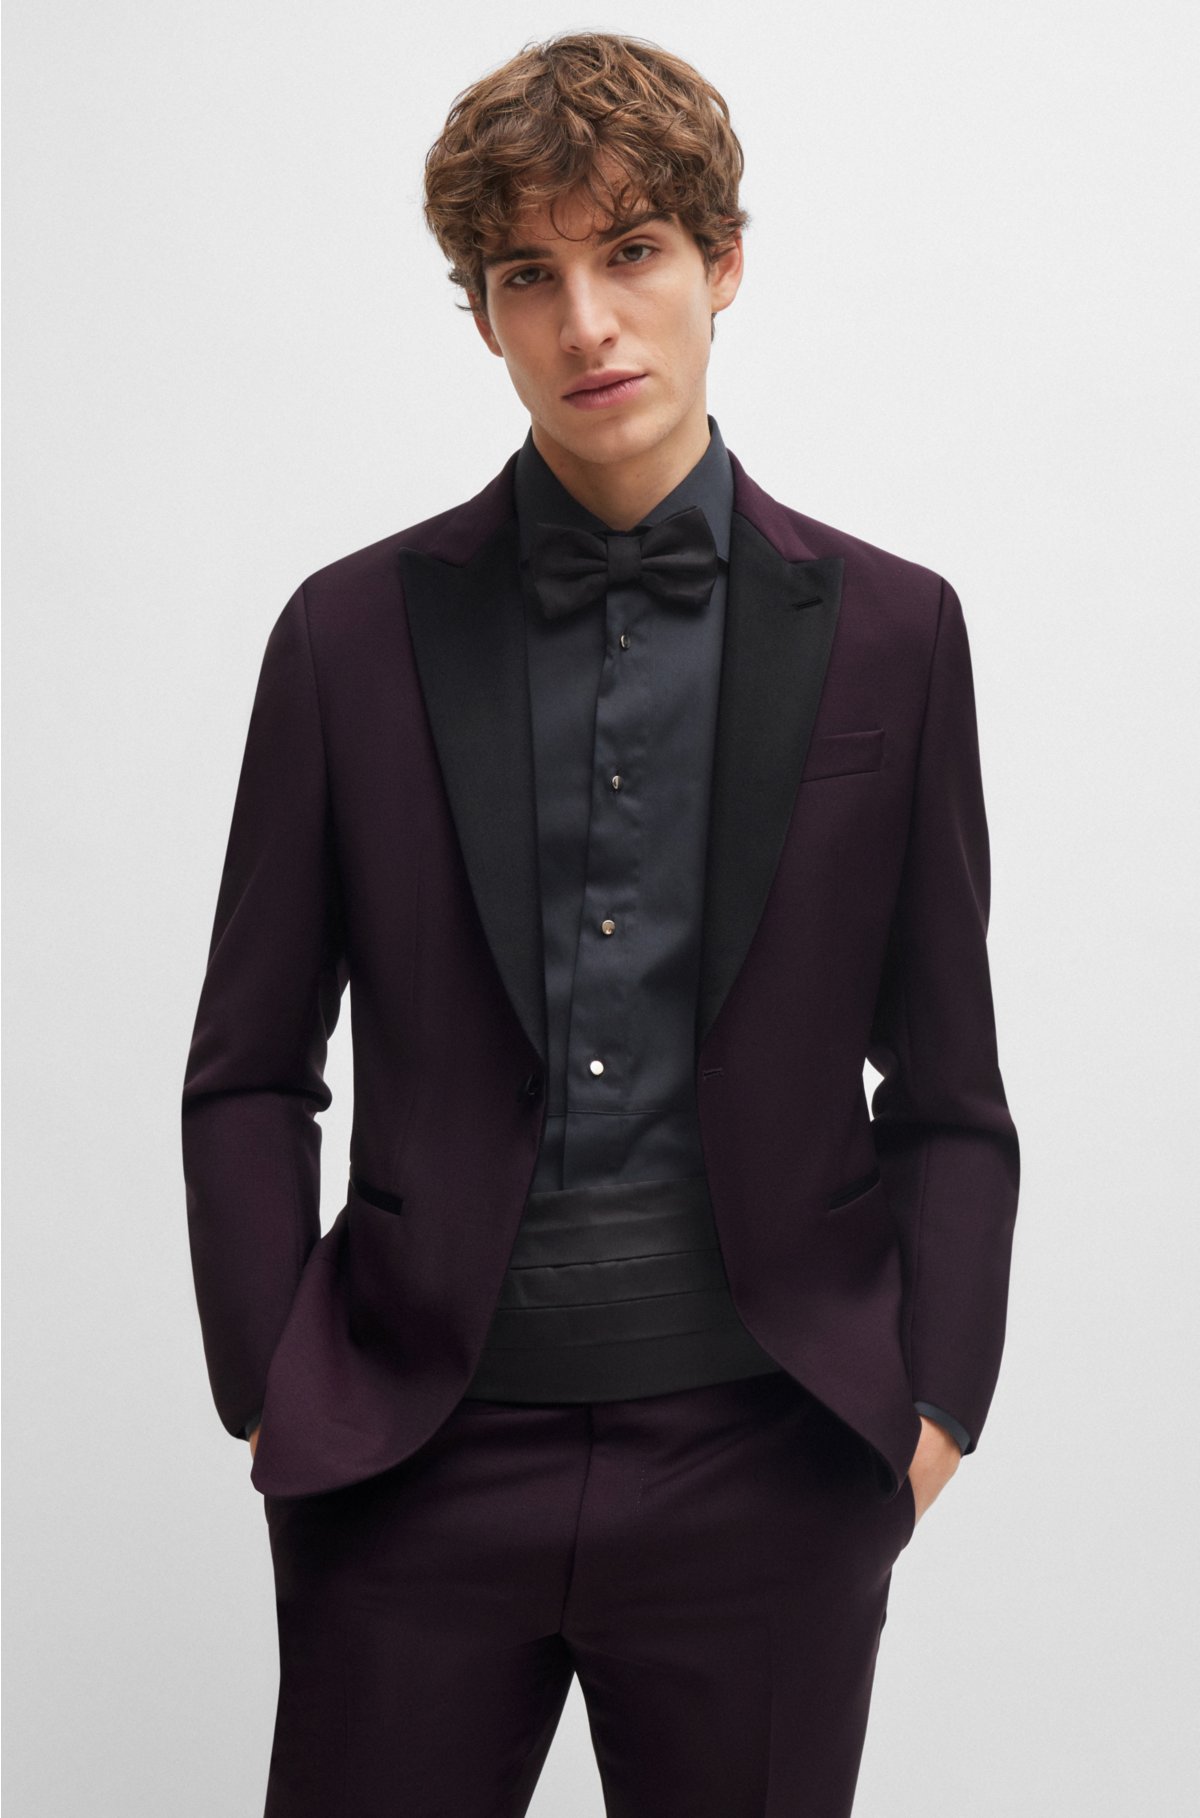 BOSS - Slim-fit tuxedo in Italian virgin wool and mohair